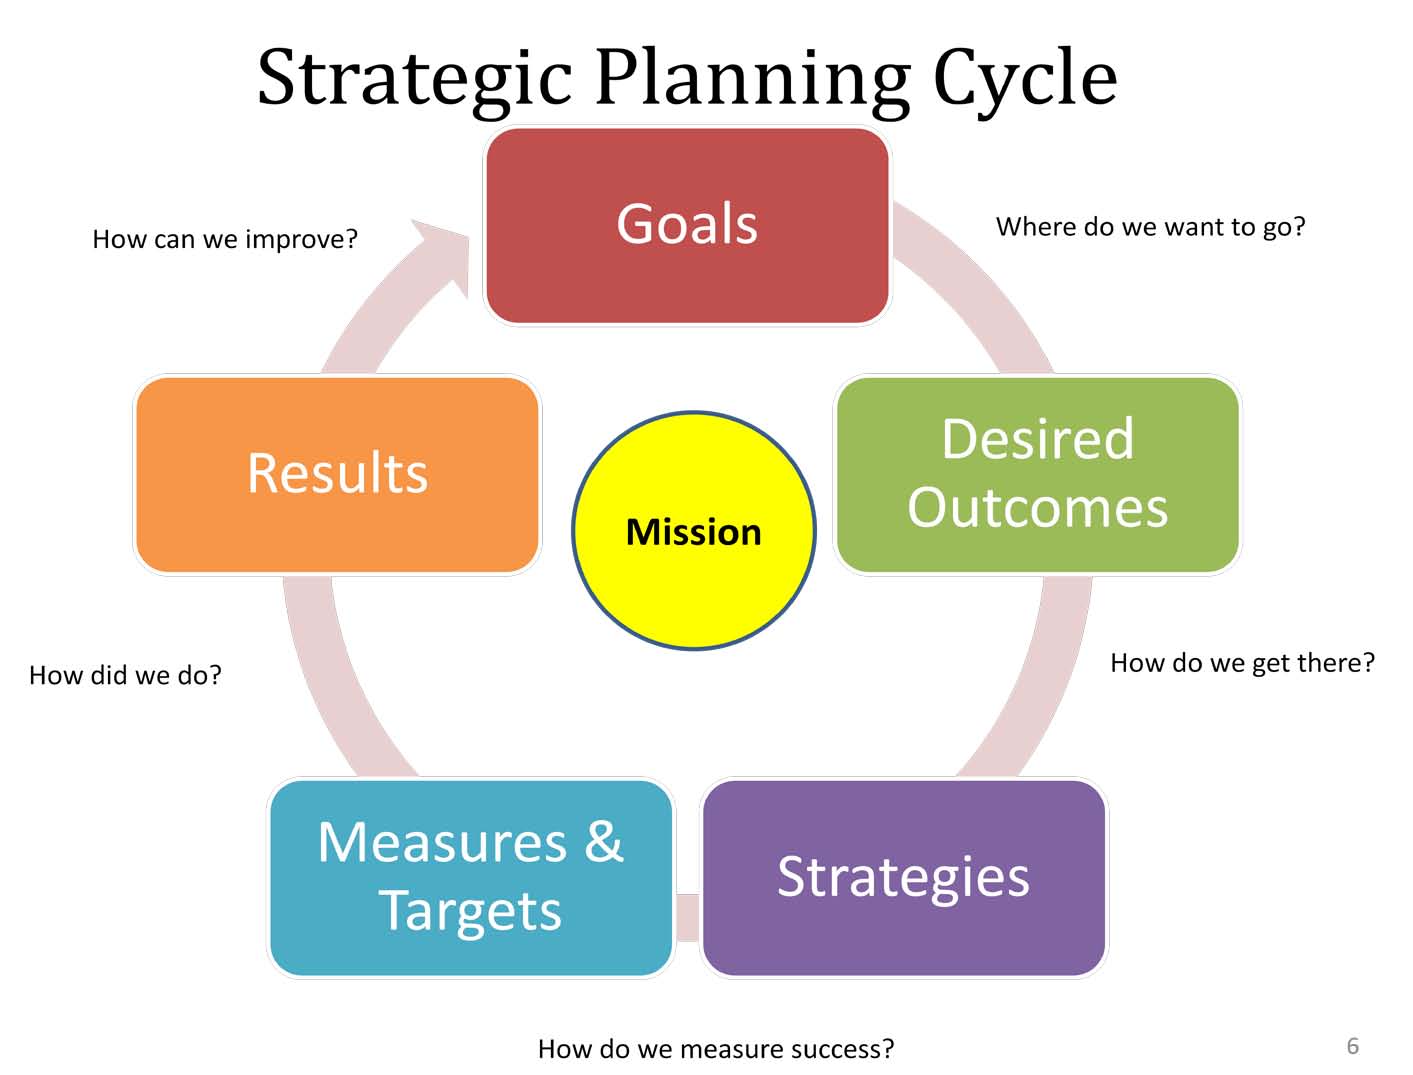 strategic planning model example